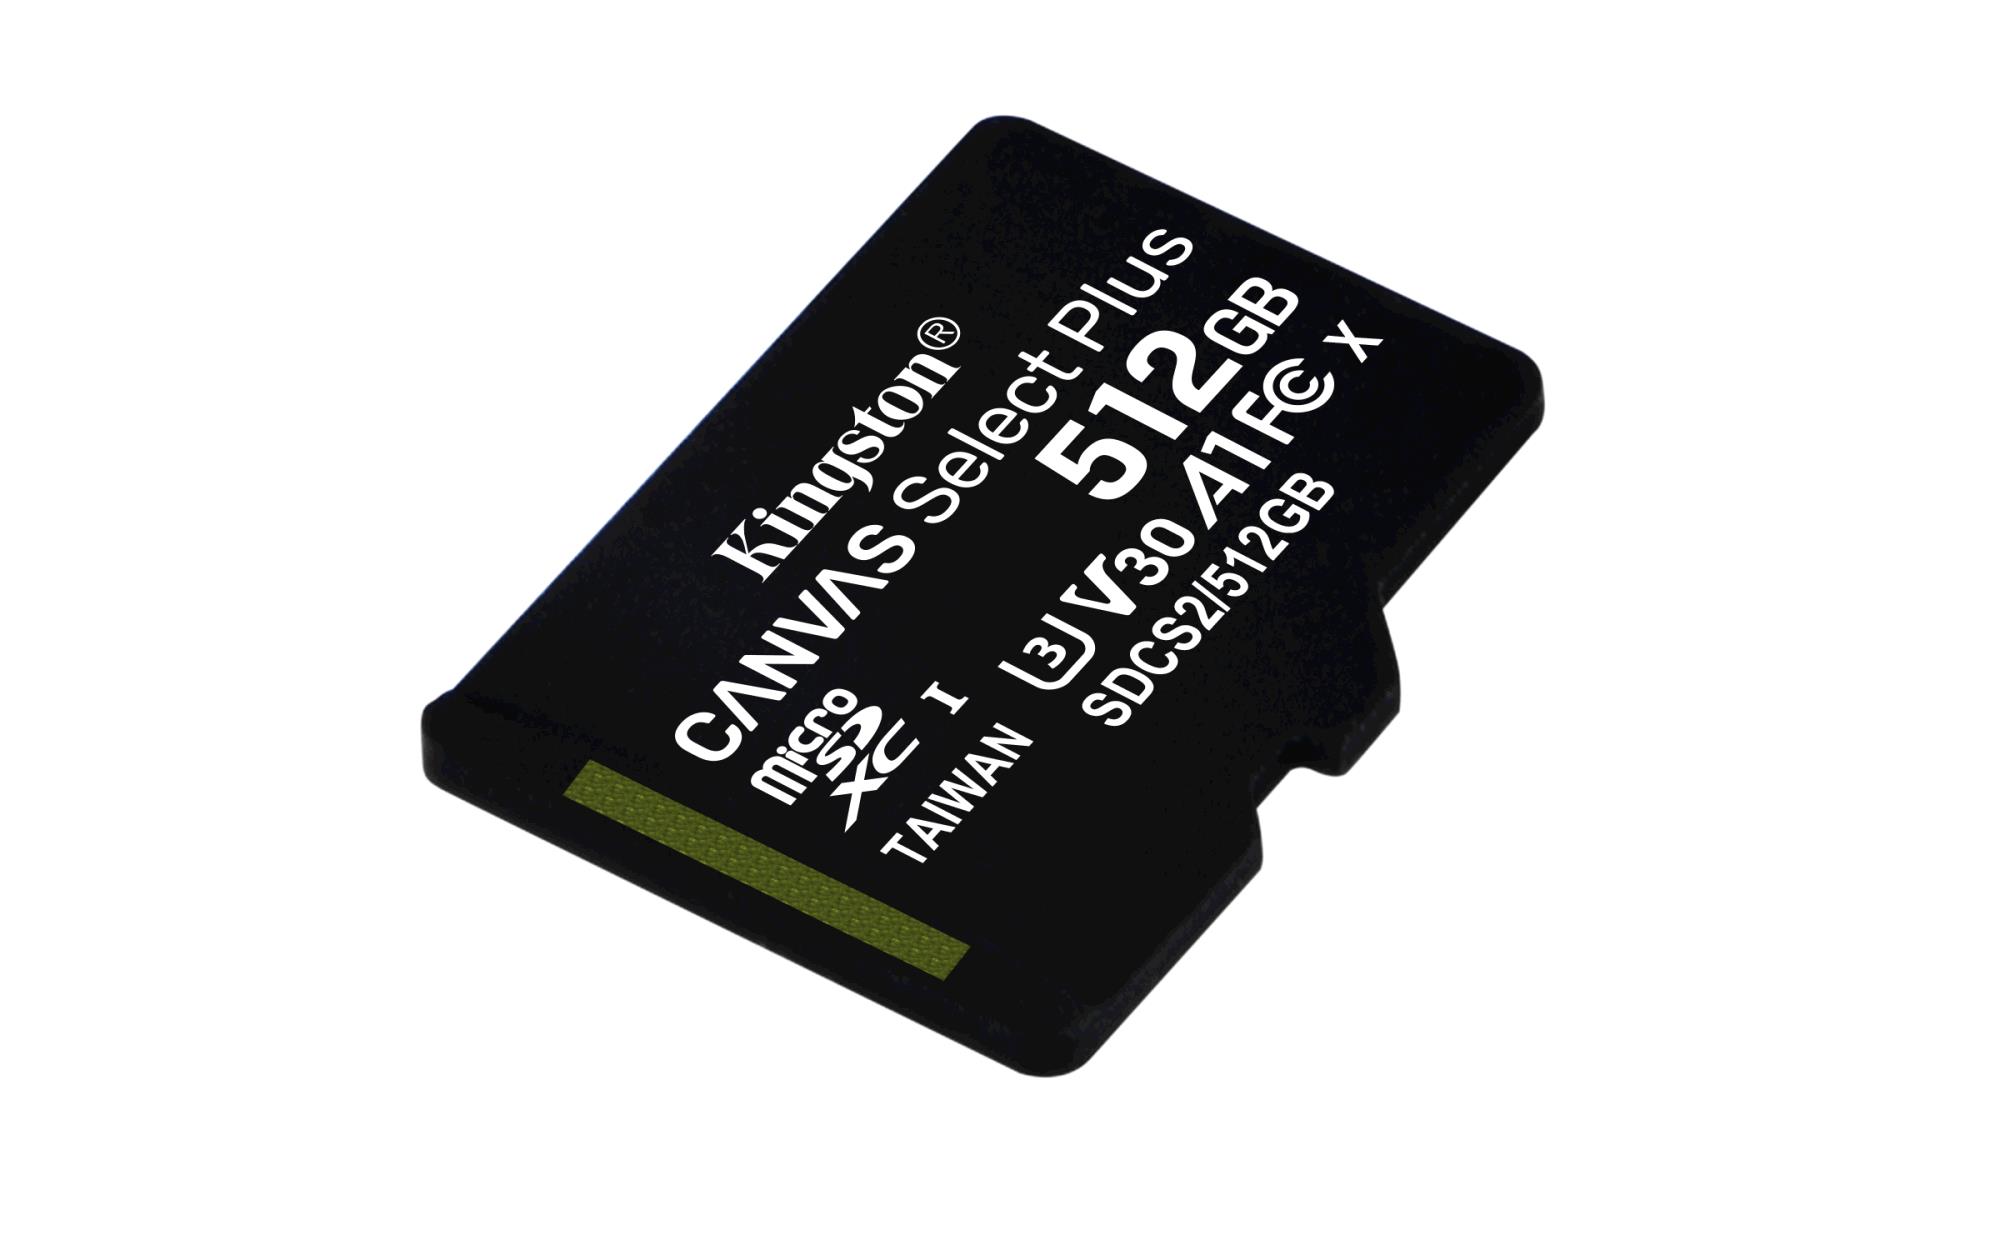 Kingston Canvas Select Plus 512GB microSDHC